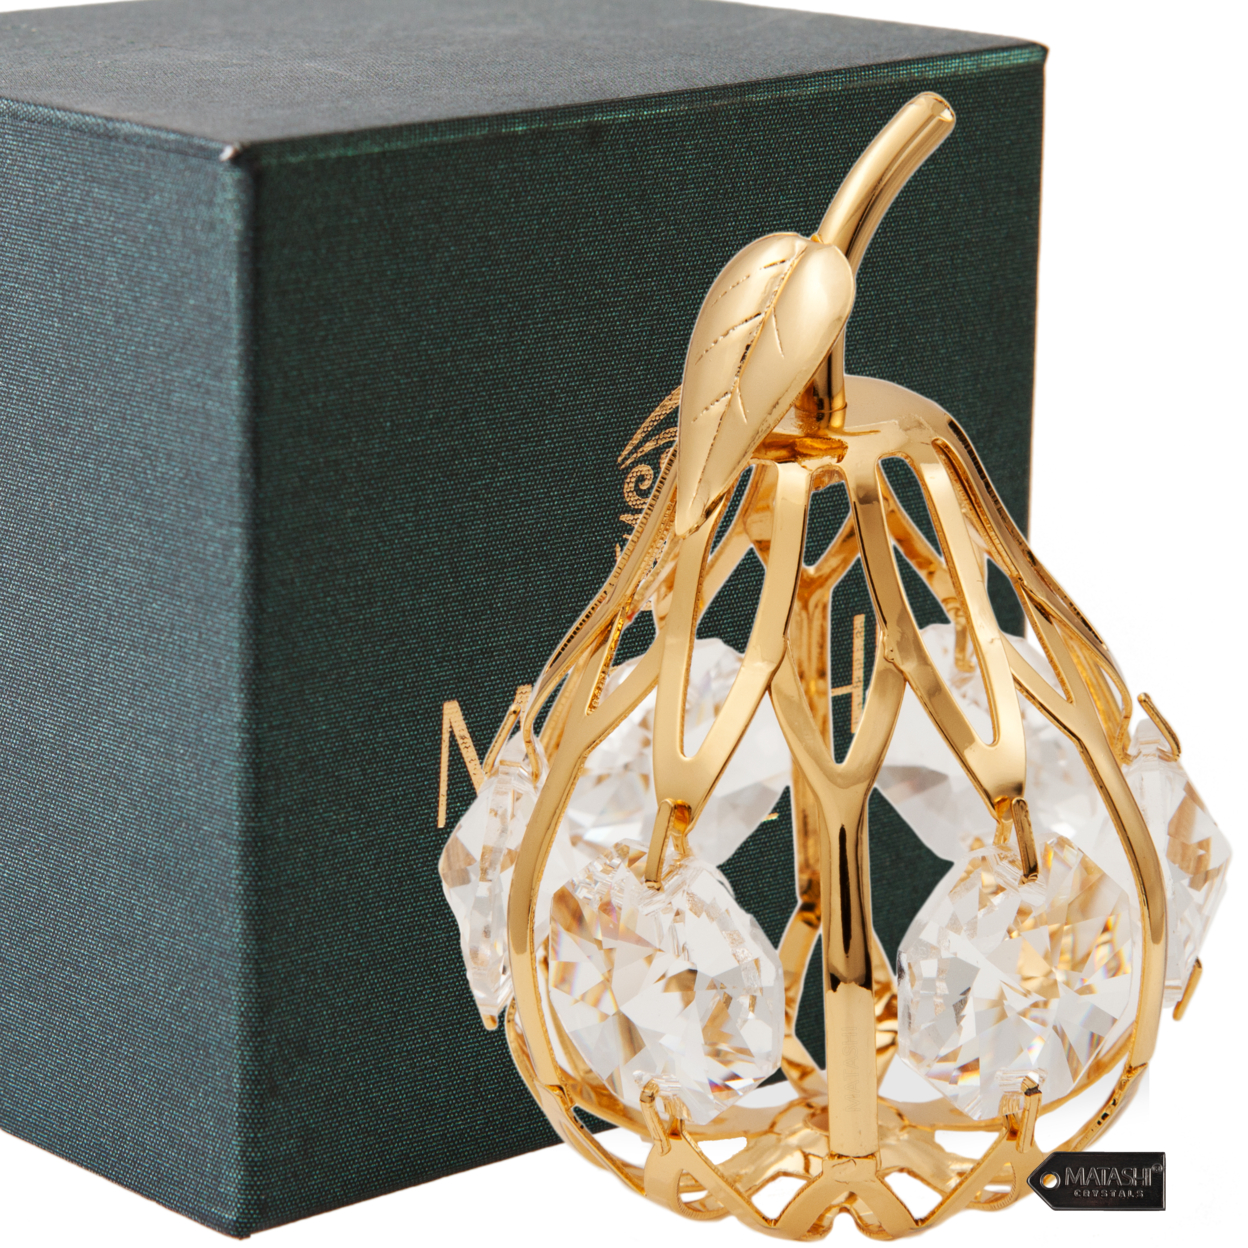 Matashi 24K Gold Plated Crystal Studded Mini Pear Ornament With Genuine Crystals For Christmas Decoration Tabletop Birthday Seasonal Gift